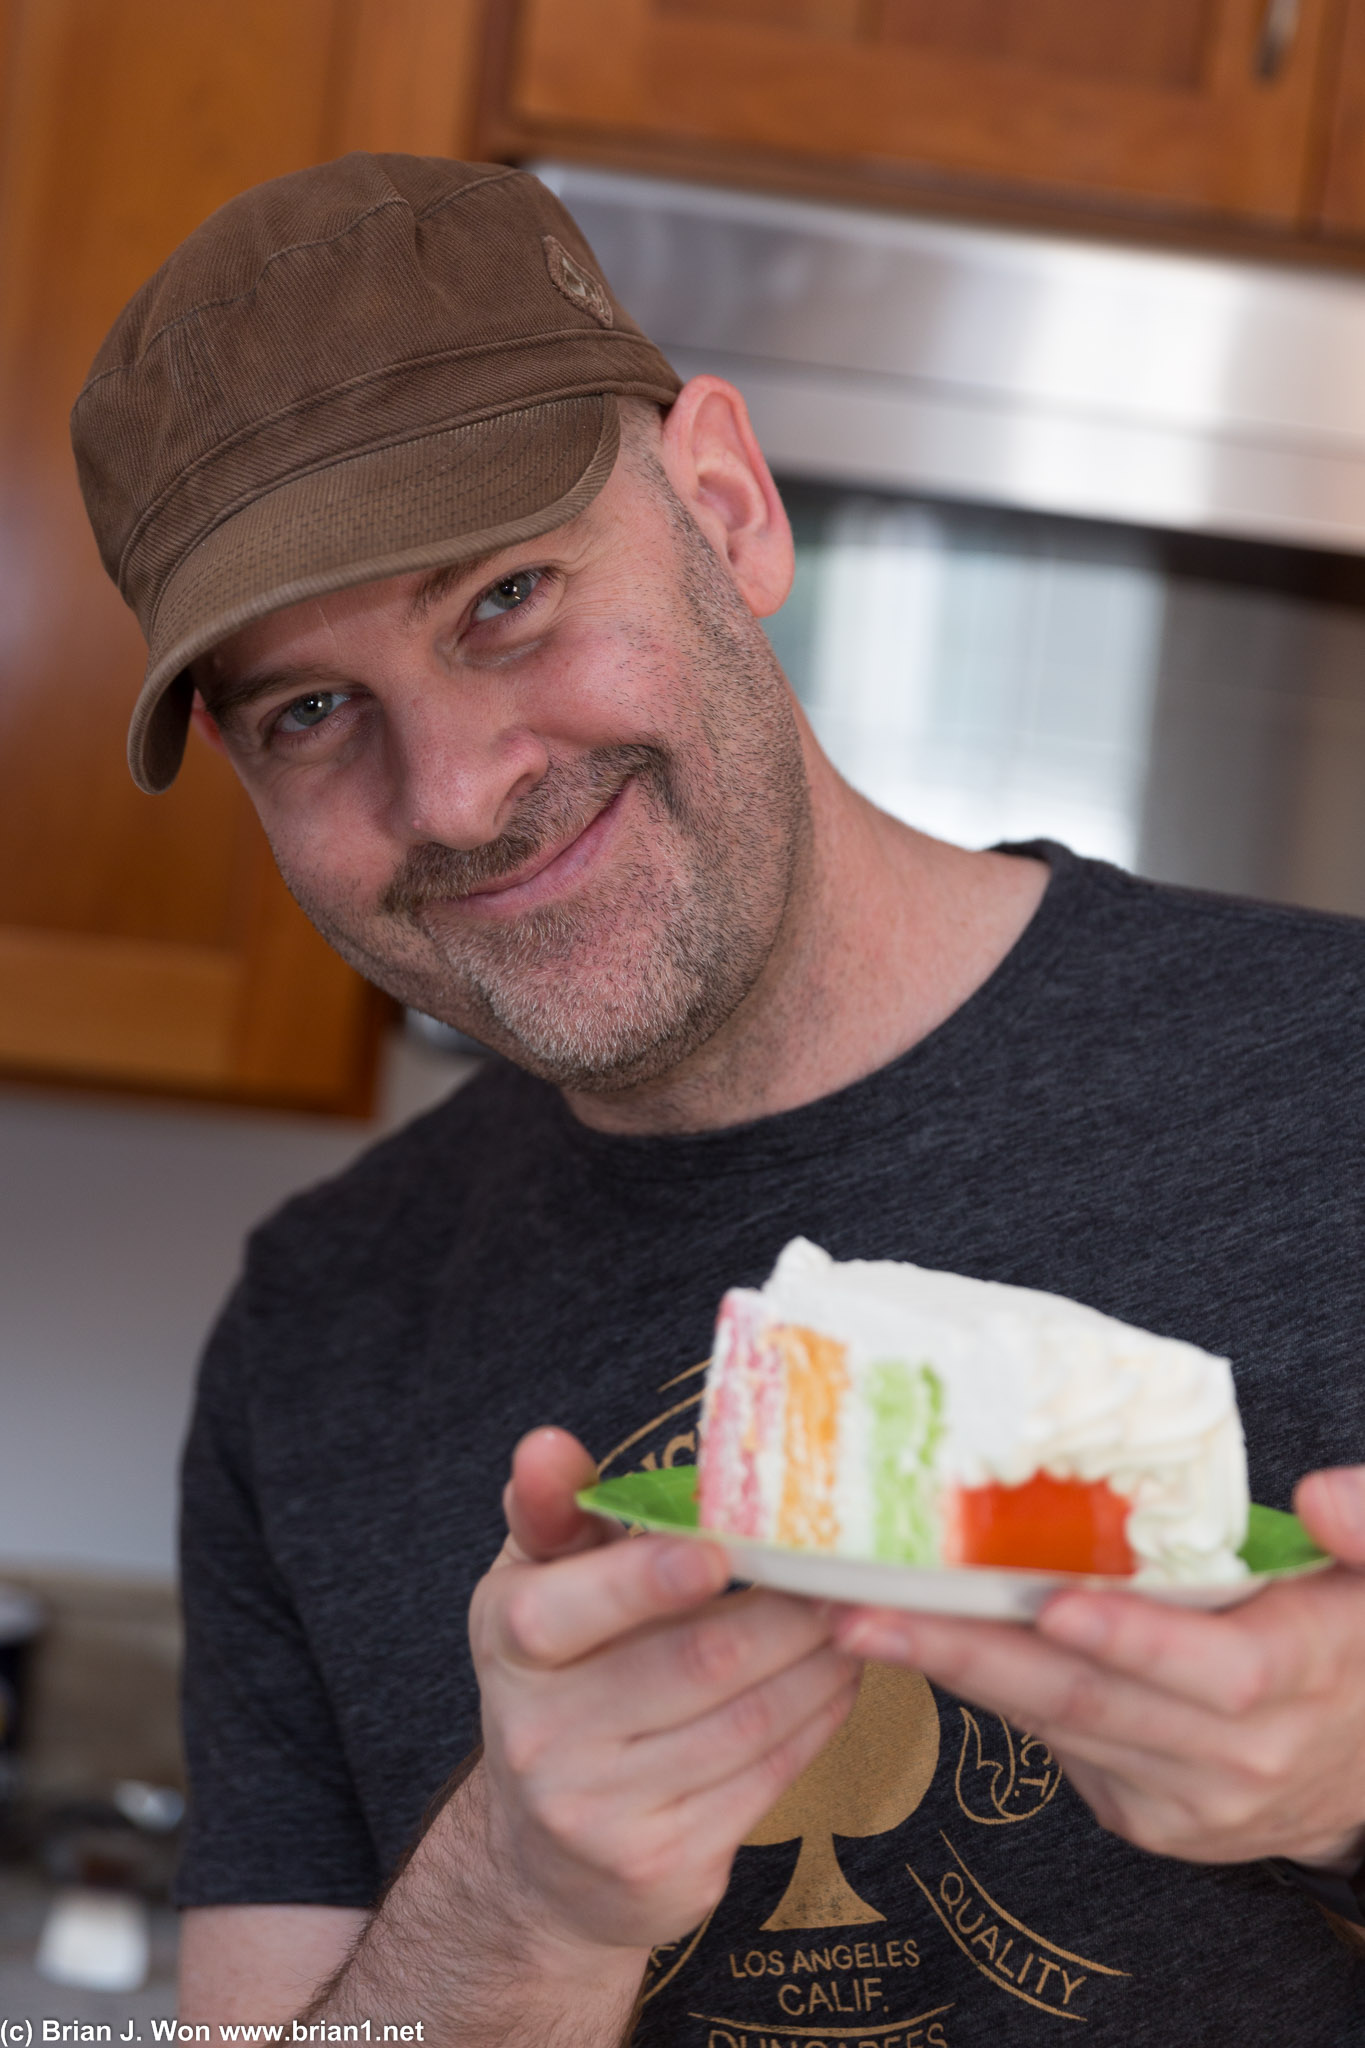 As long as Jeff has cake, he's happy.